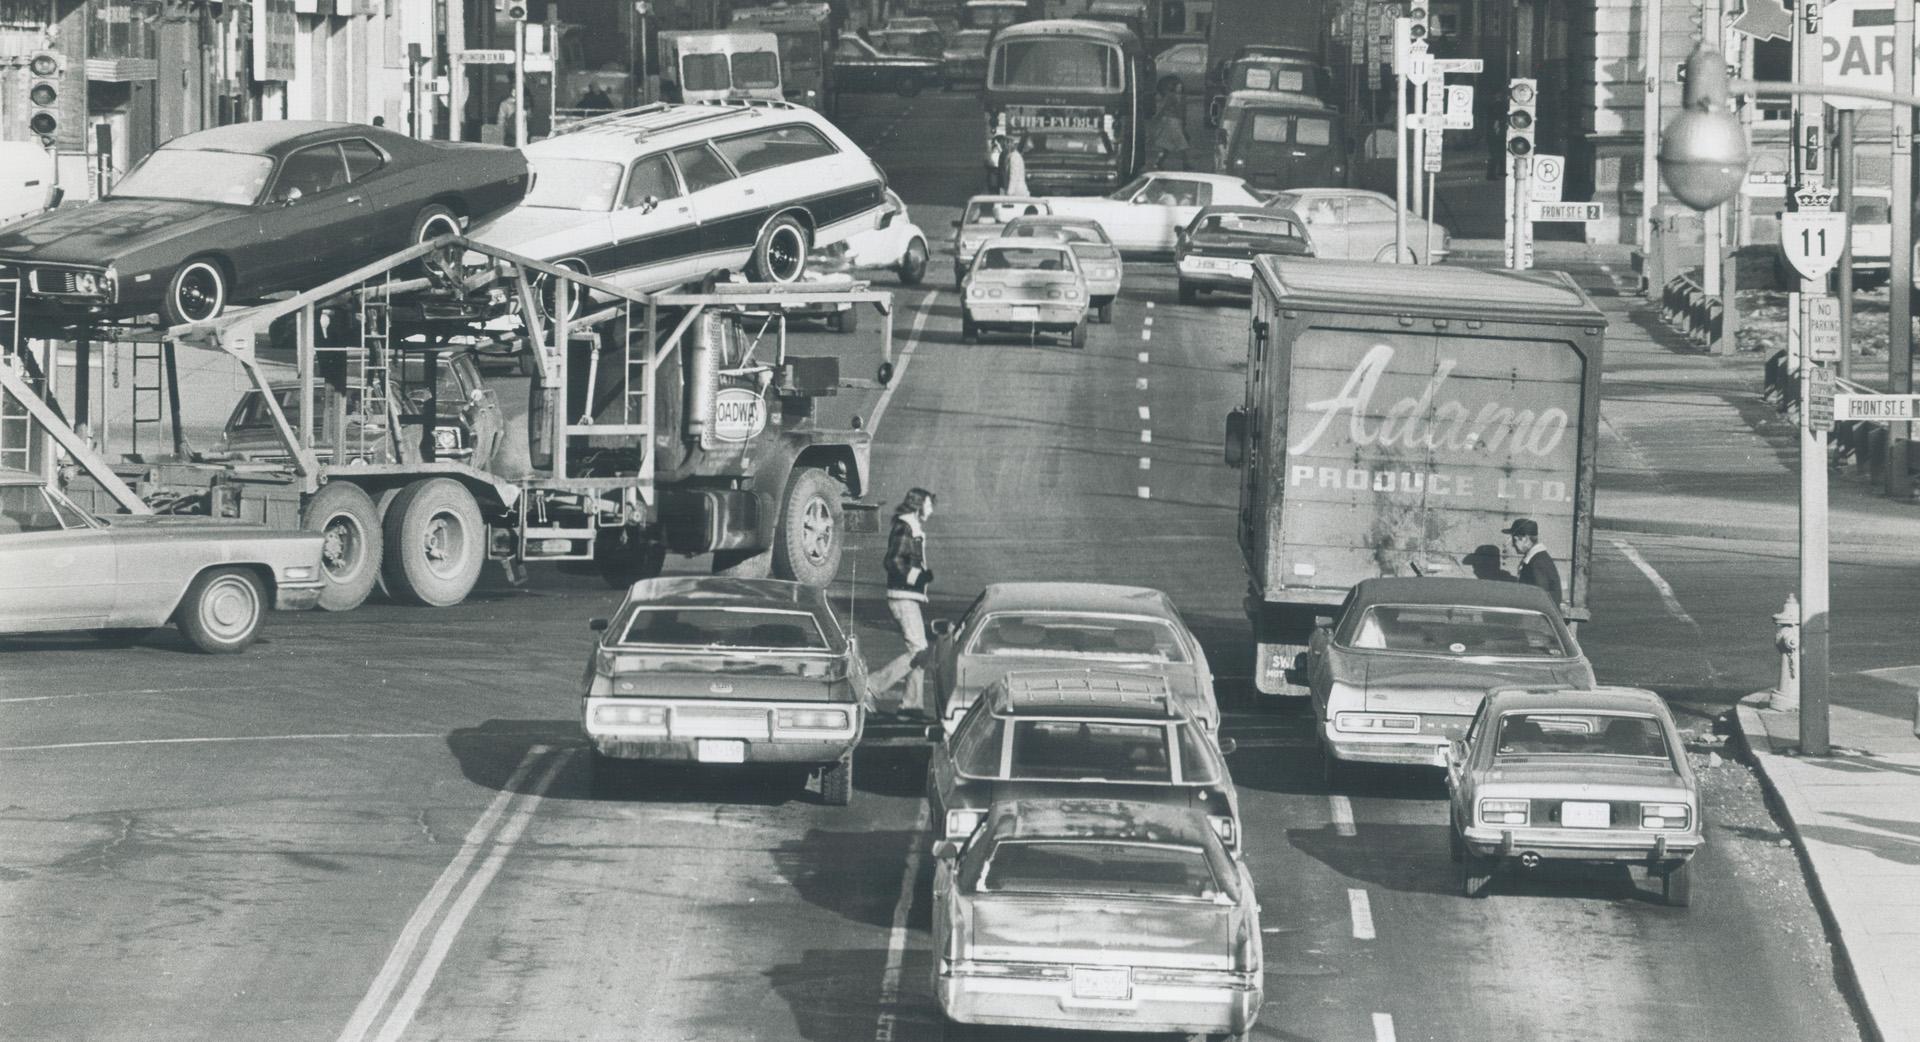 Canada - Ontario - Toronto - Traffic - Miscellaneous - 1973-74 (1 of 2 files)